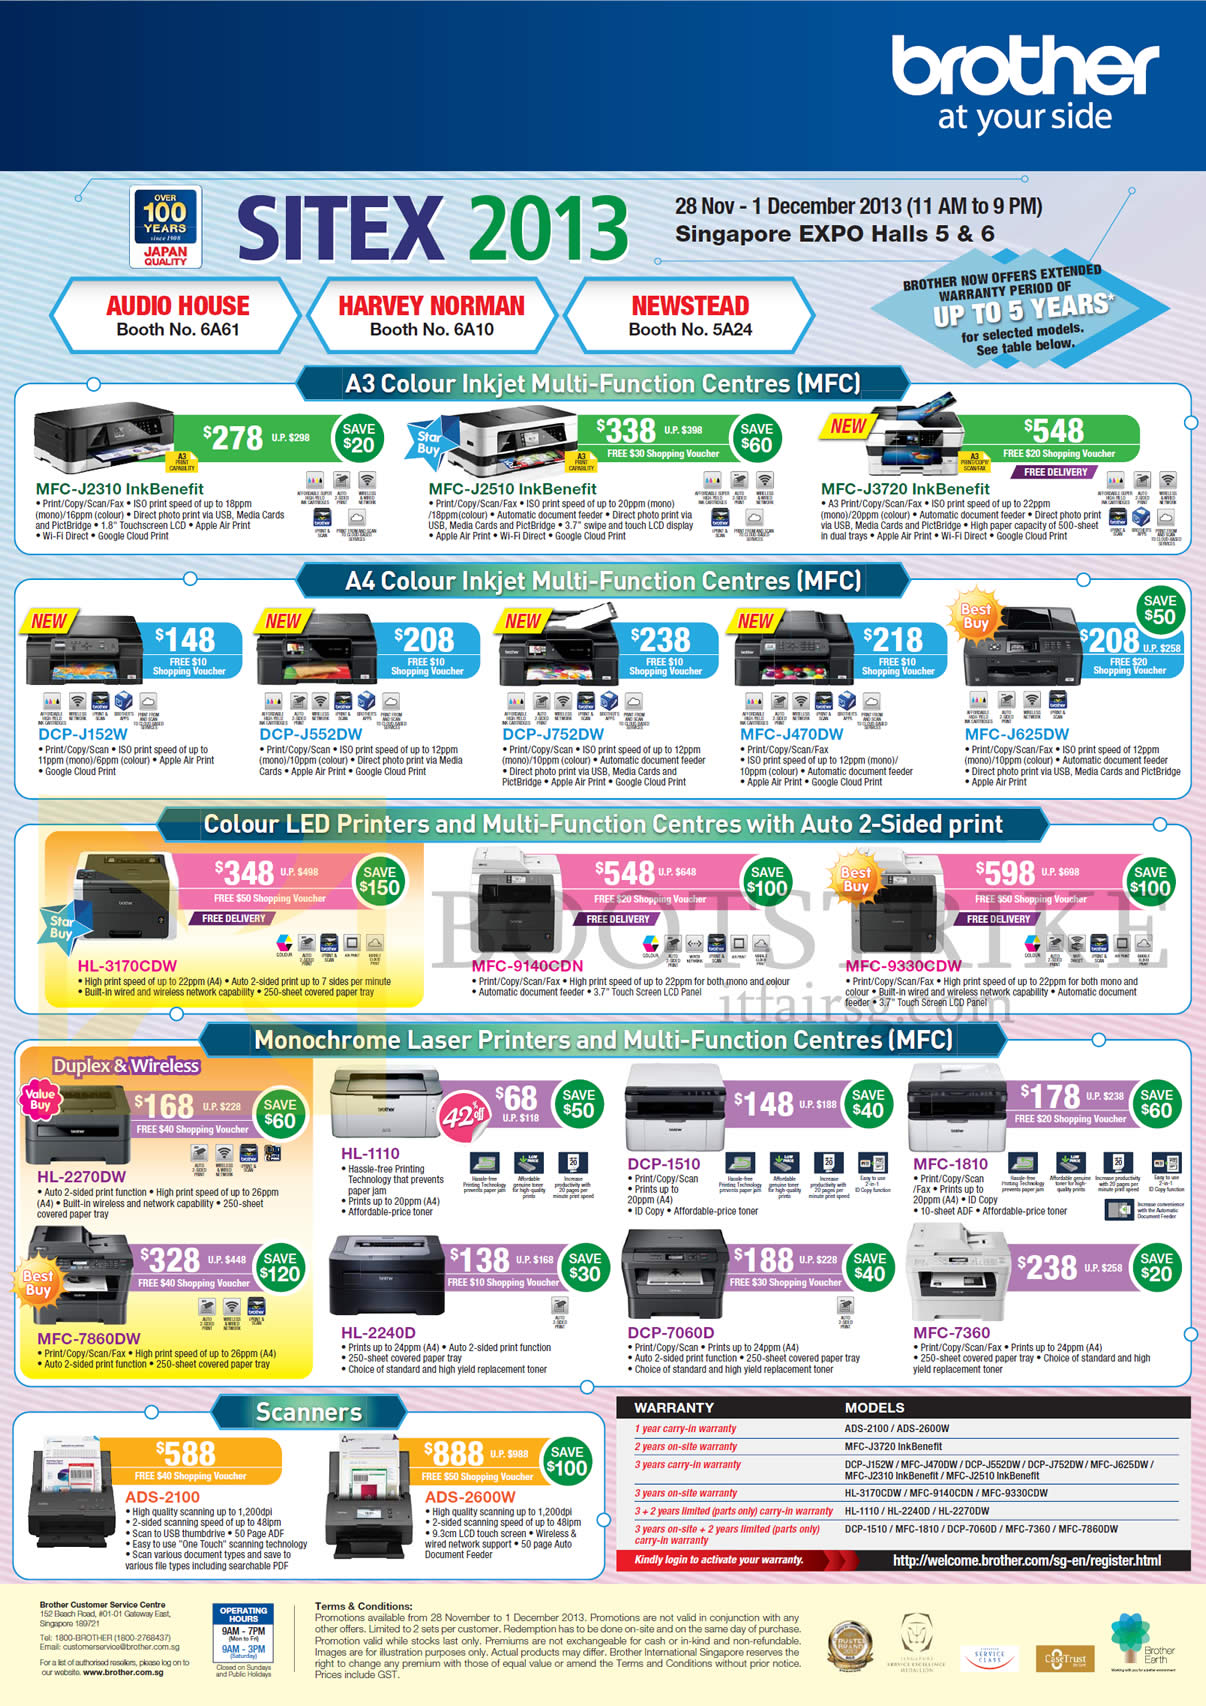 SITEX 2013 price list image brochure of Brother Laser Inkjet Printers Scanners MFC-J2310, J2510, J3720, 1810, 7360, DCP-J152W, J552DW, 1510, 7060D, HL-3170CDW, 1110, 2240D